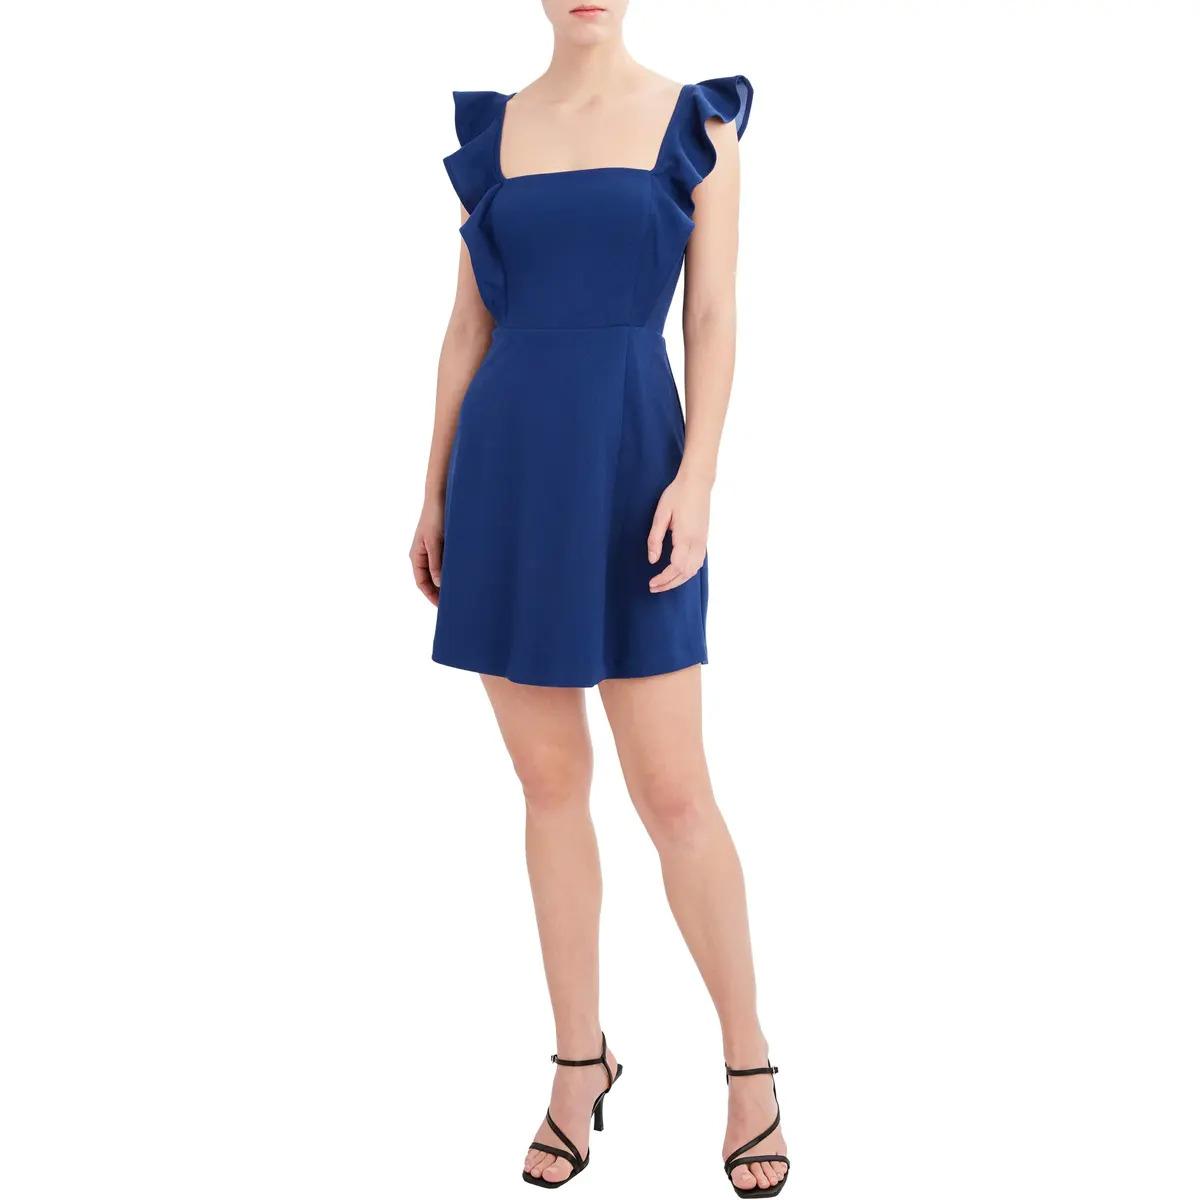 BCBG Paris Ruffle Strap Mini Dress for $11.86